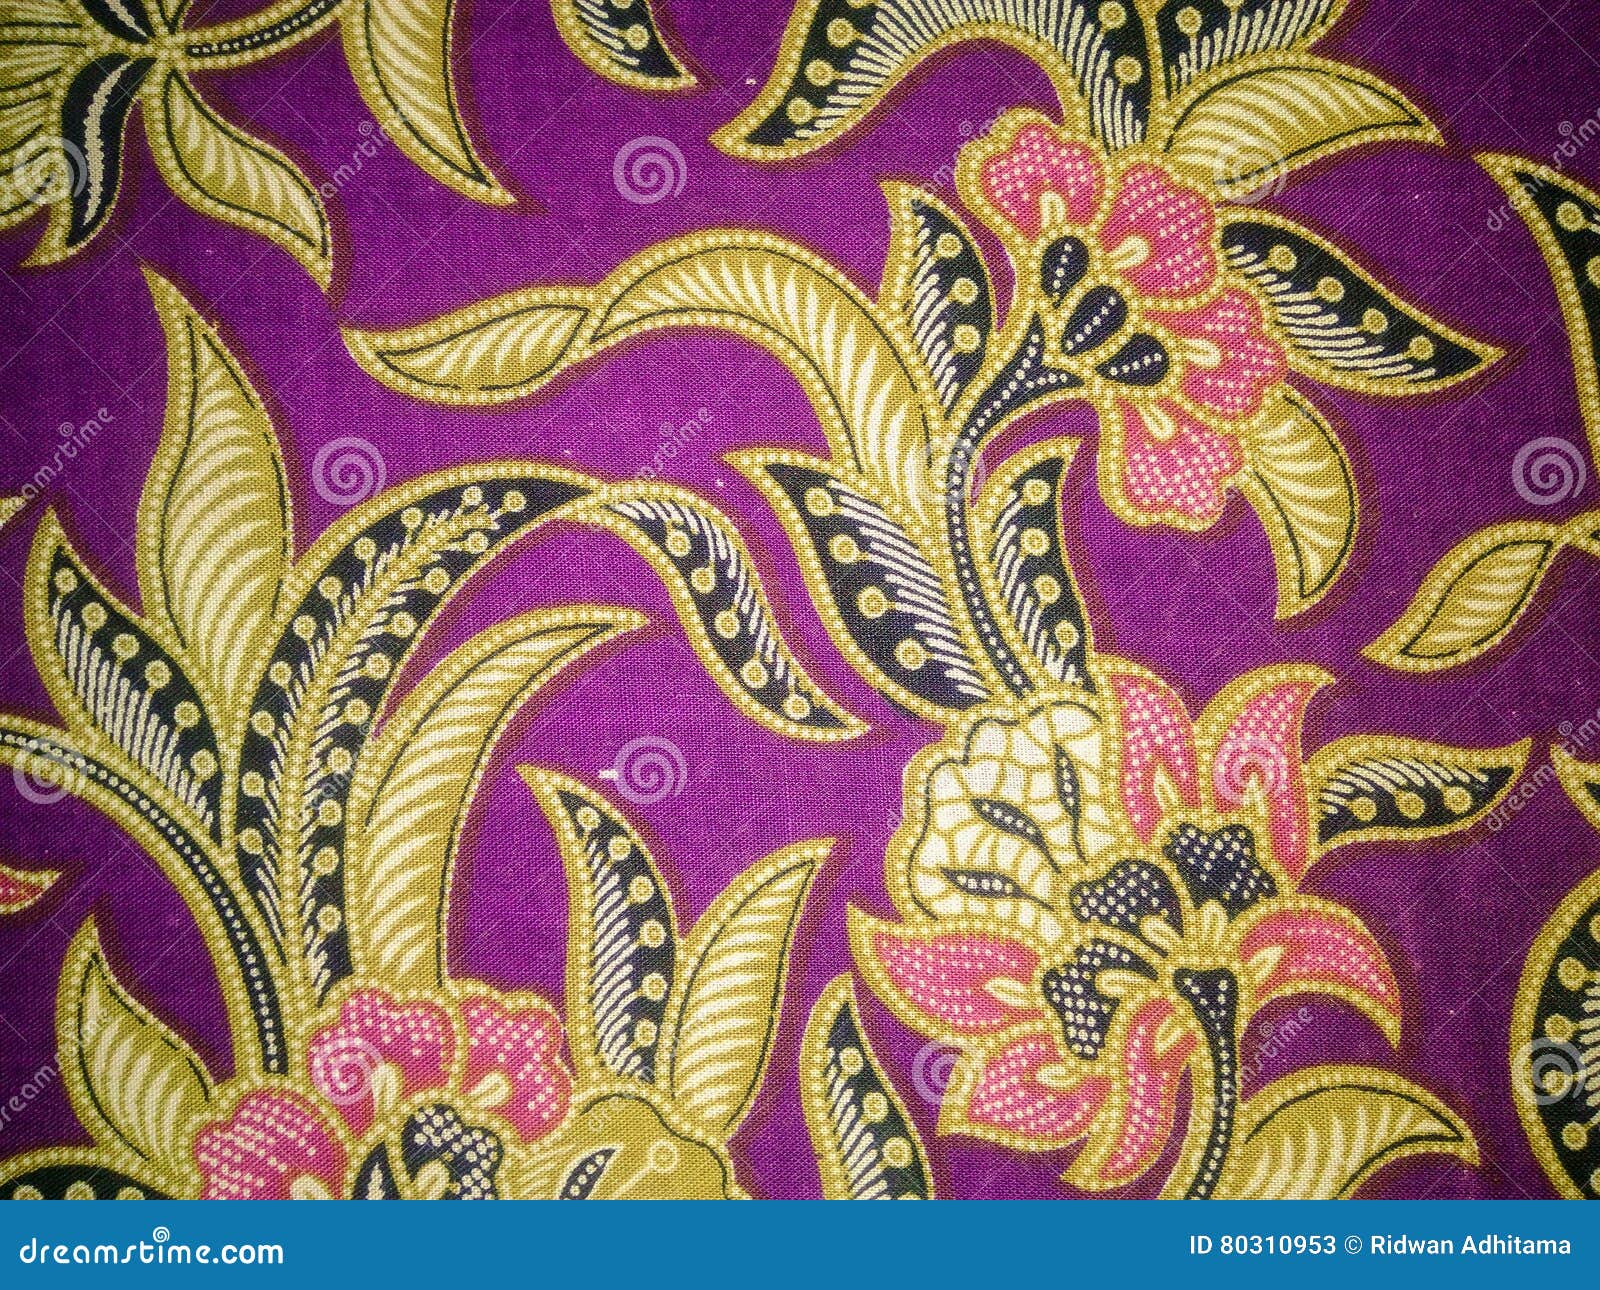  Batik fabric art  stock image Image of culture leaf 